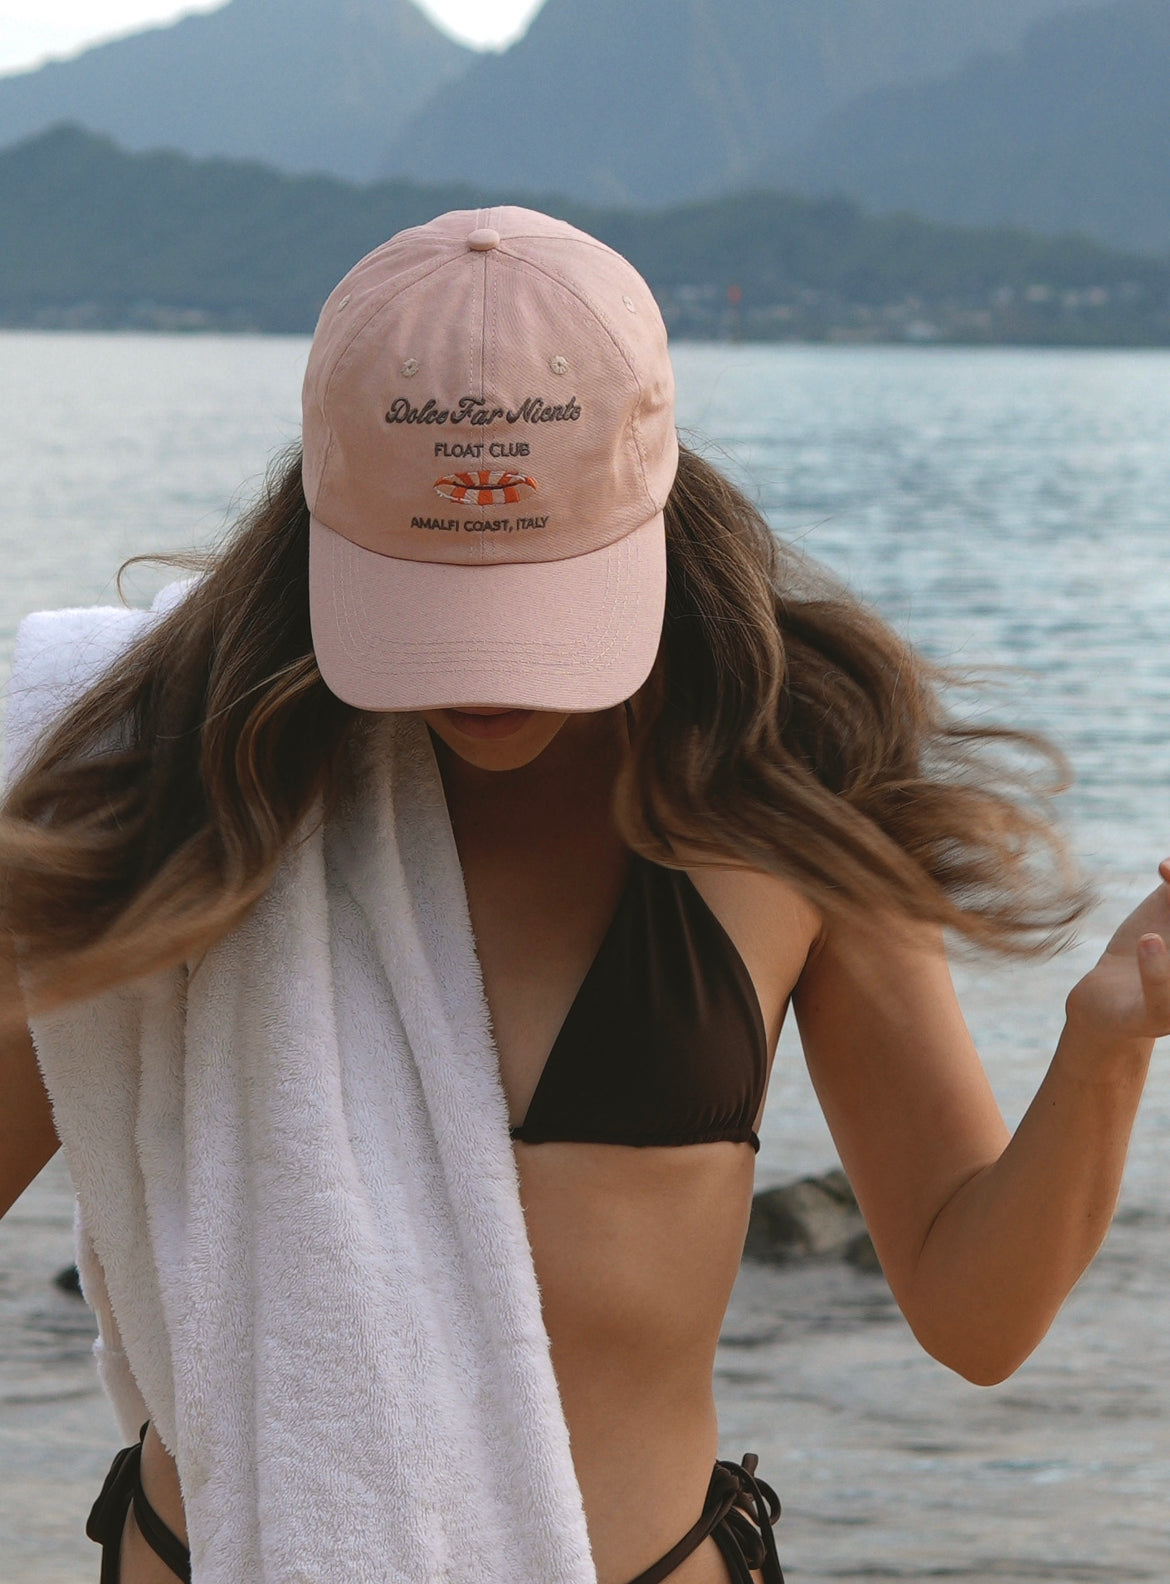 Amalfi Coast ball cap, Positano dad cap, pink women baseball cap. Dolce Far Niente, Light pink hat Italy, satin interior lining ball cap 